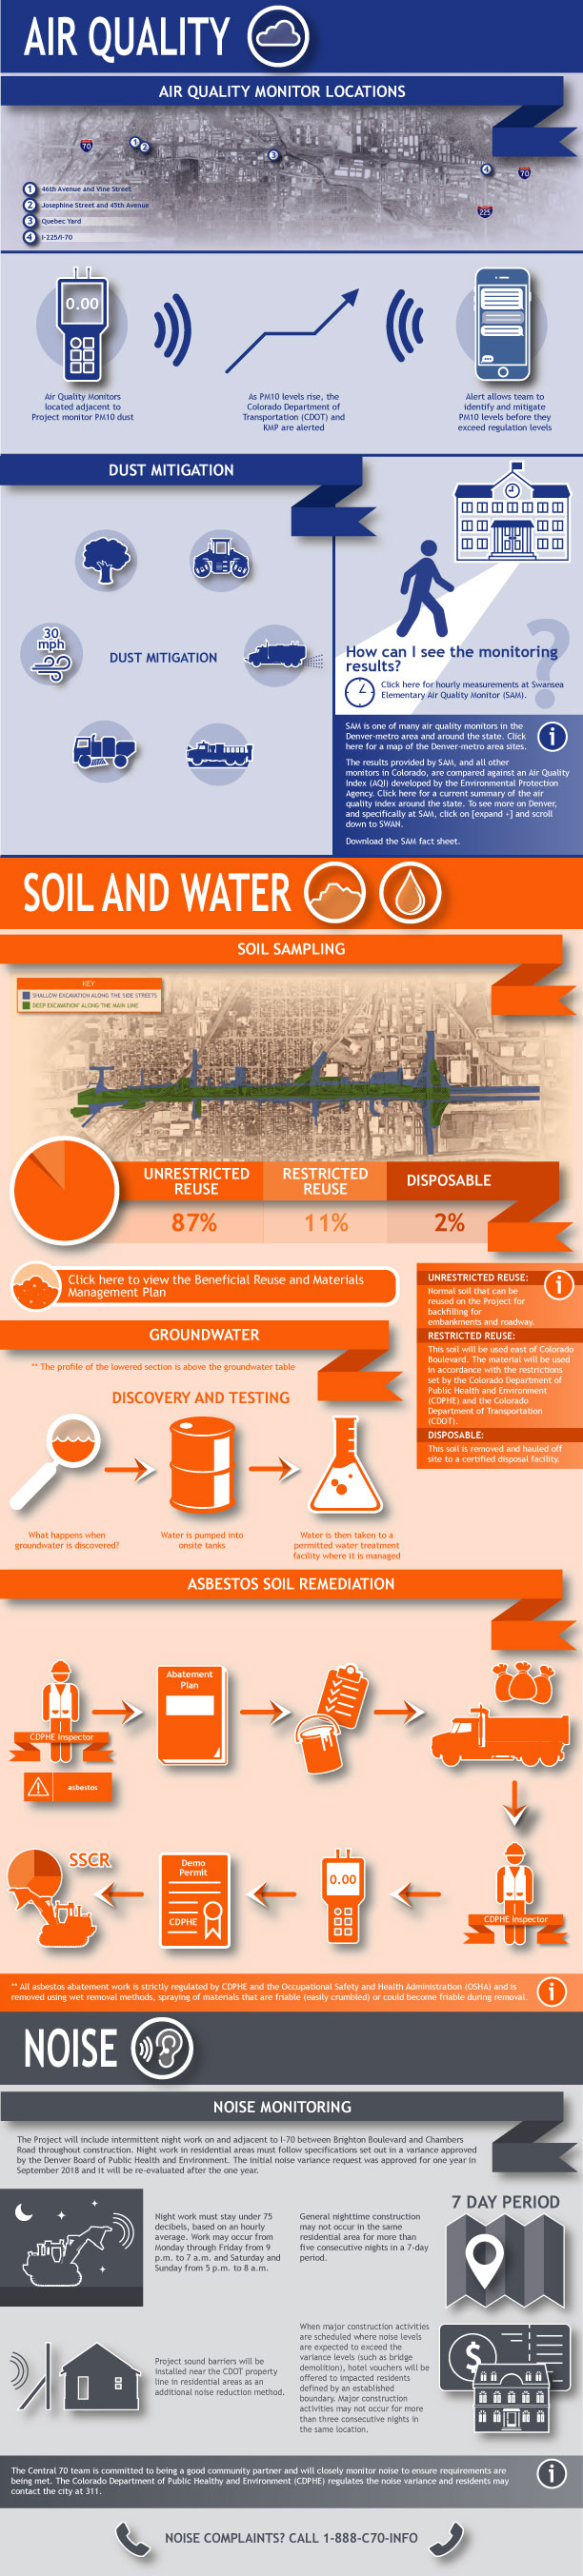 Environmental-Infographic-Reduced-rev11-2.jpg detail image